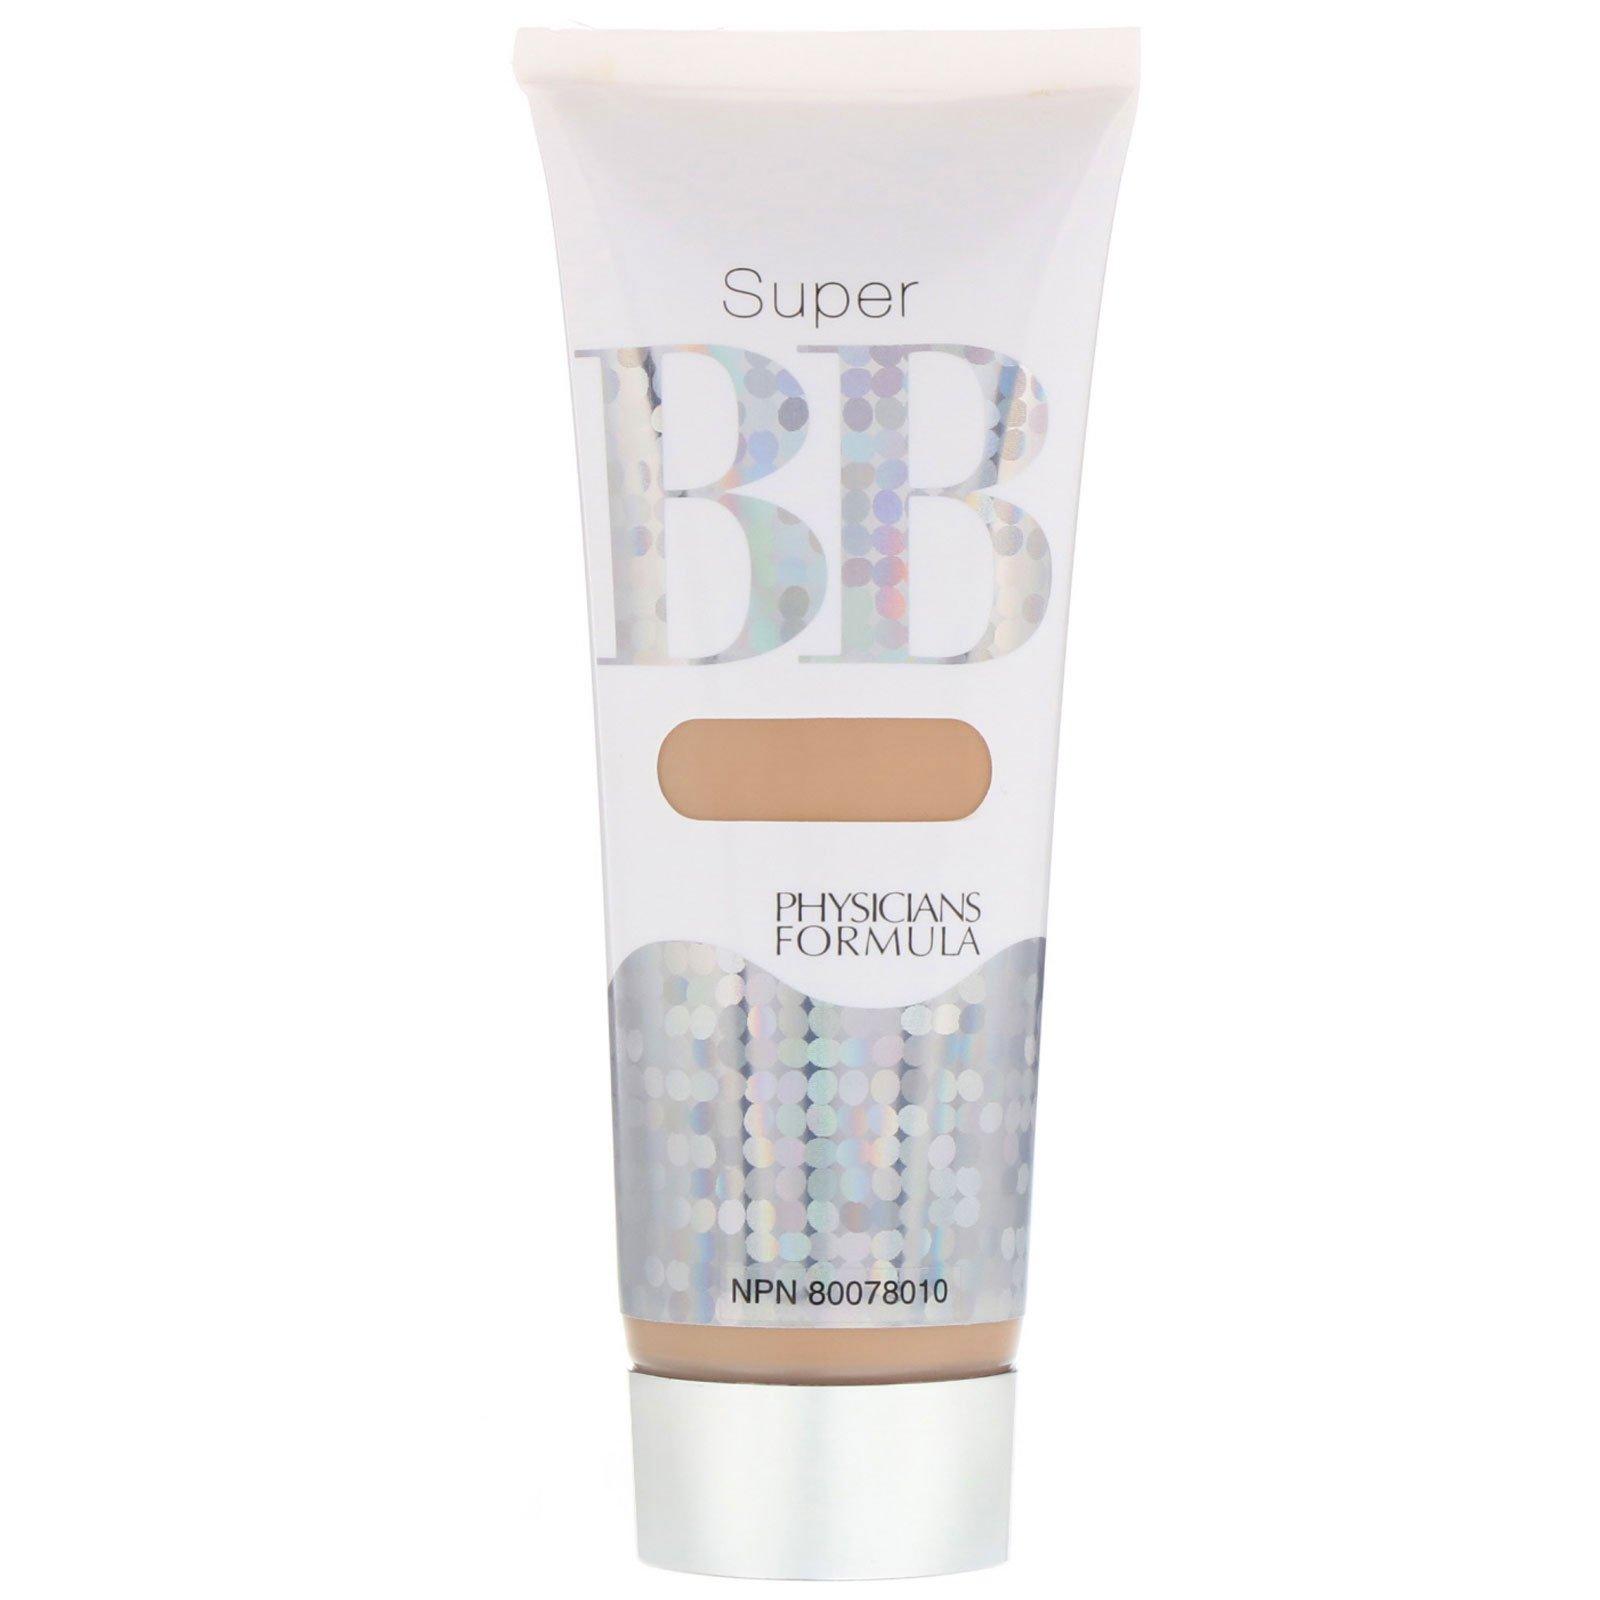 Super BB All-In-1 Beauty Balm Cream